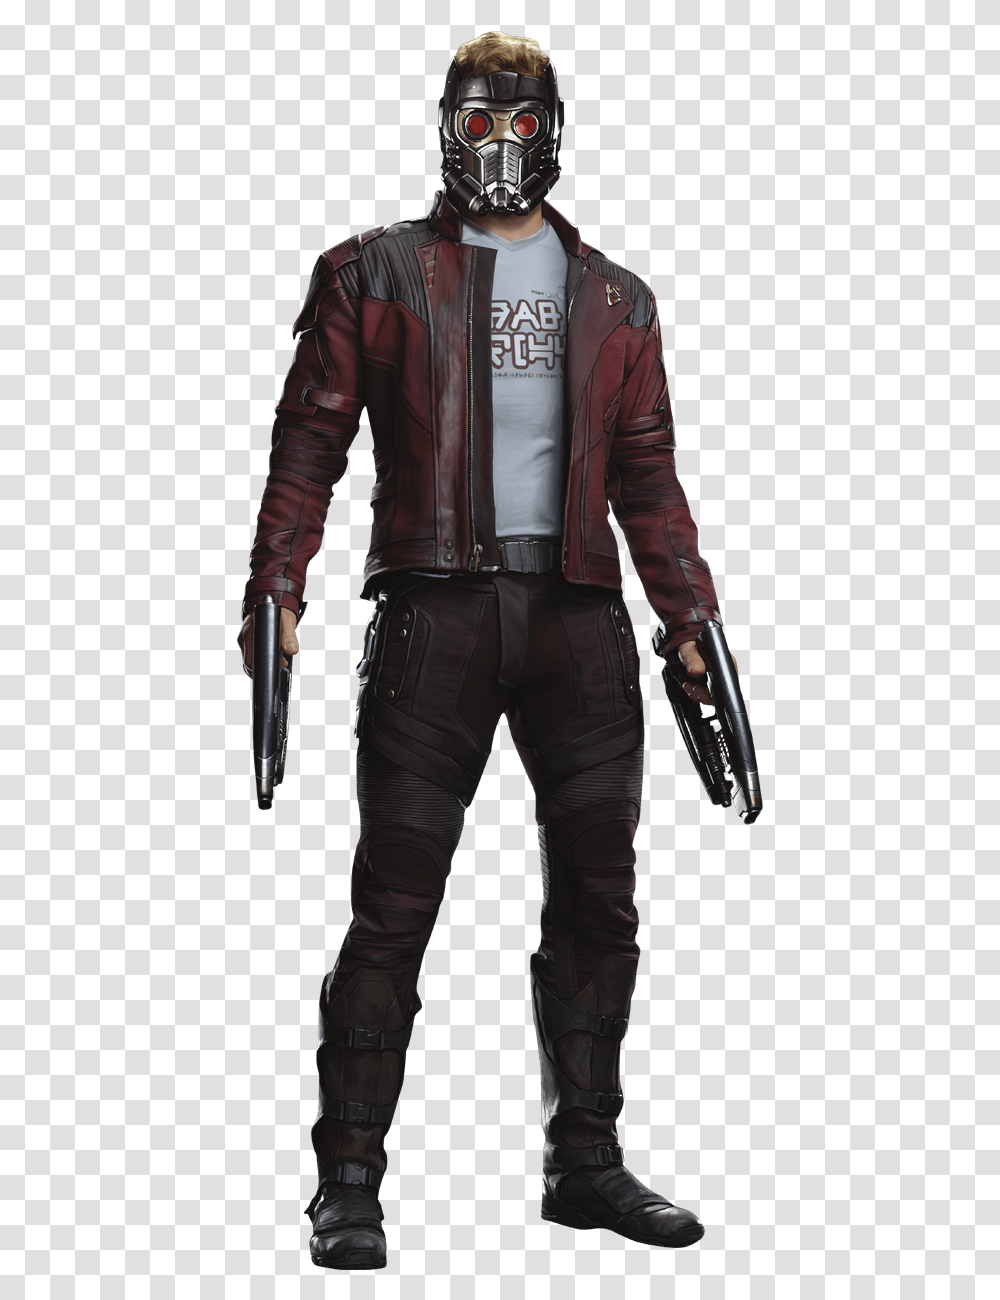 Star Lord 2 Image Chris Pratt Full Body, Clothing, Apparel, Jacket, Coat Transparent Png